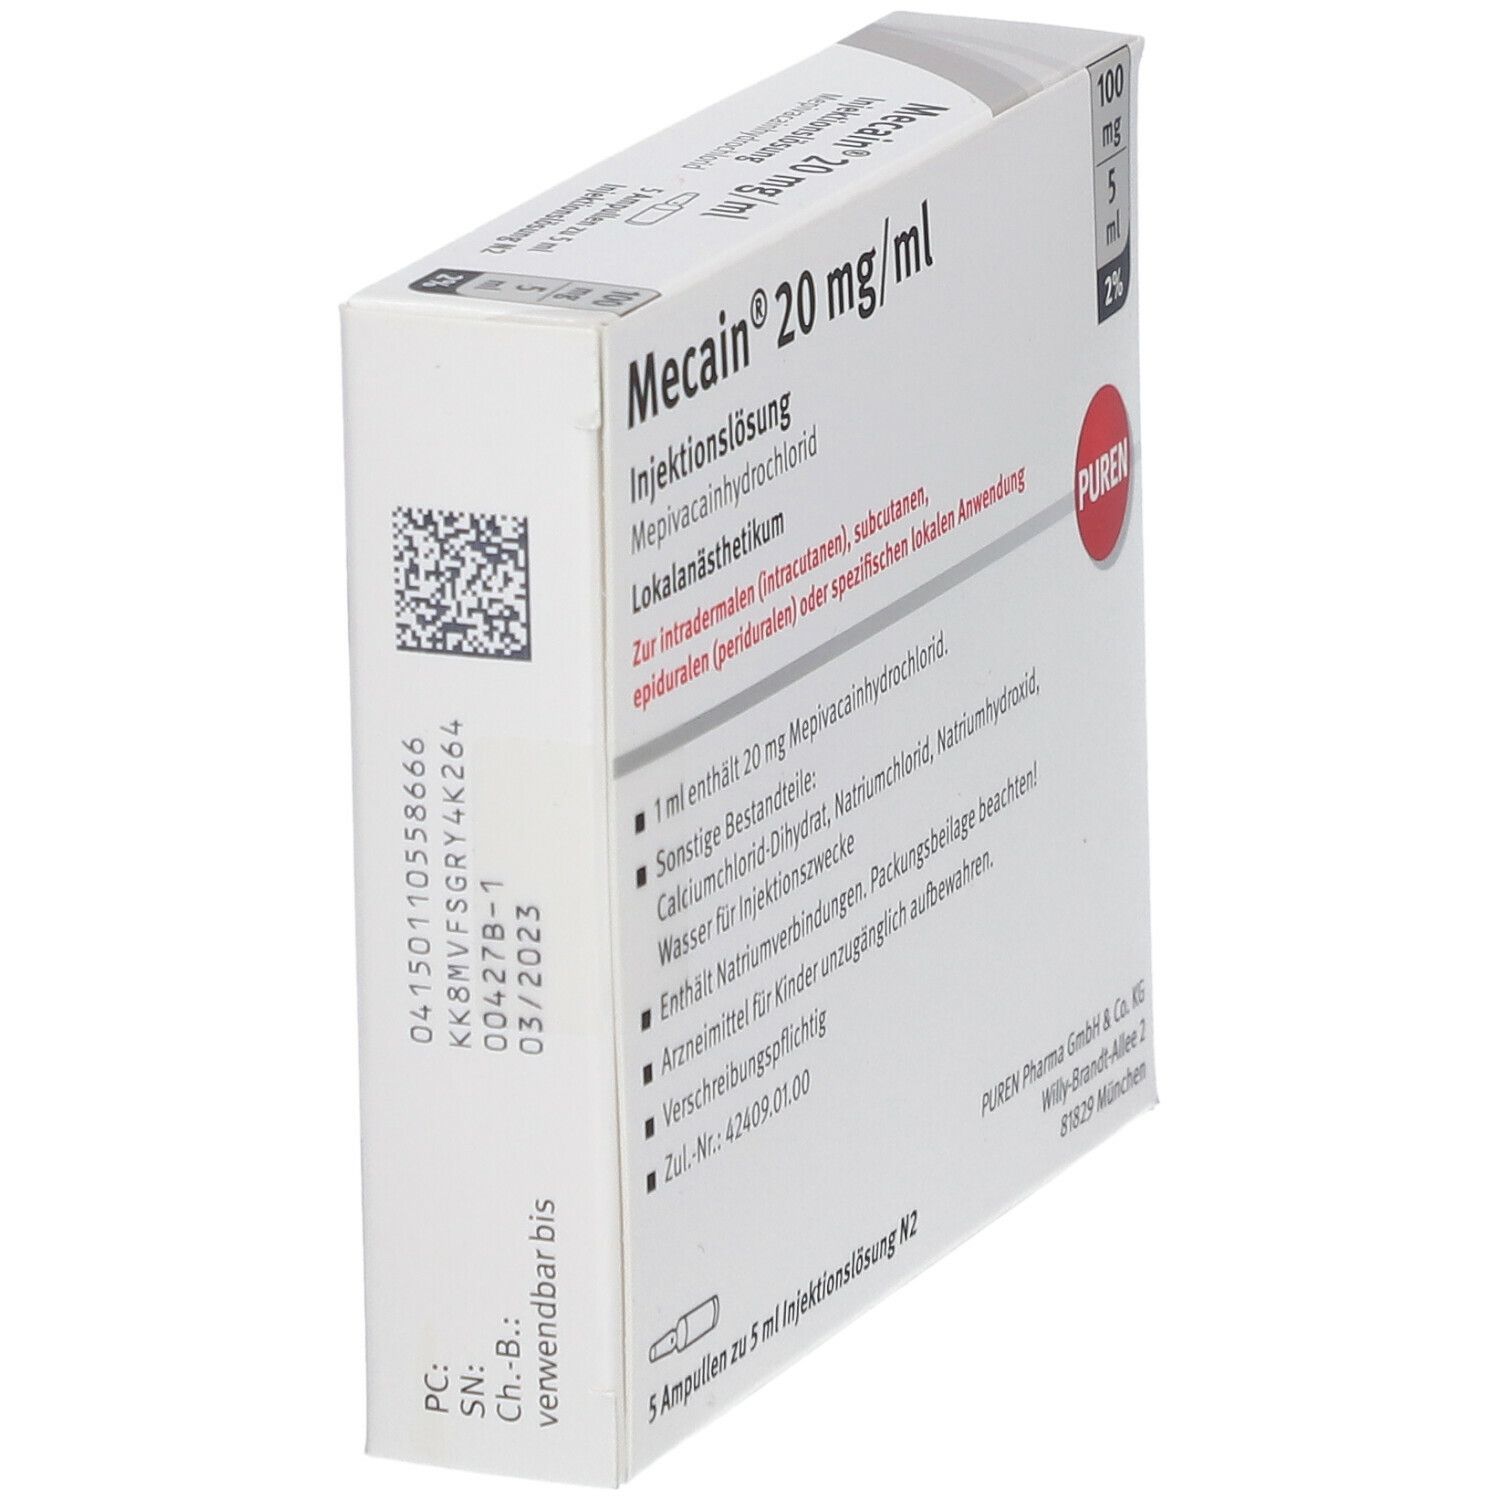 Mecain® 20 mg/ml